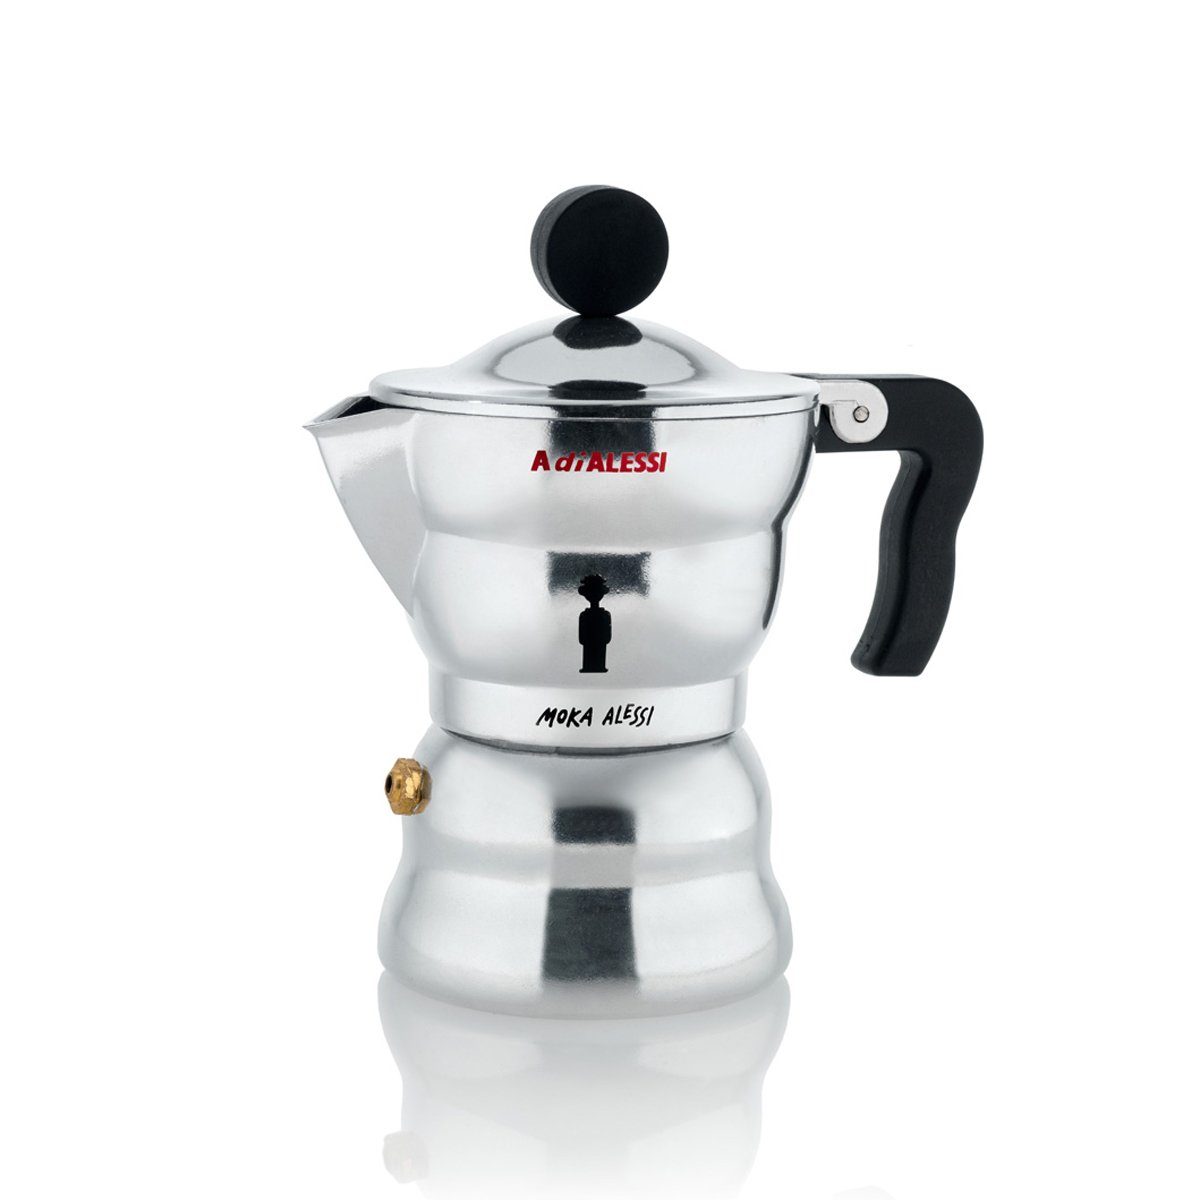 Alessi Espressokocher Espressokocher MOKA Classic 1, 0.07l Kaffeekanne, Nicht für Induktion geeignet